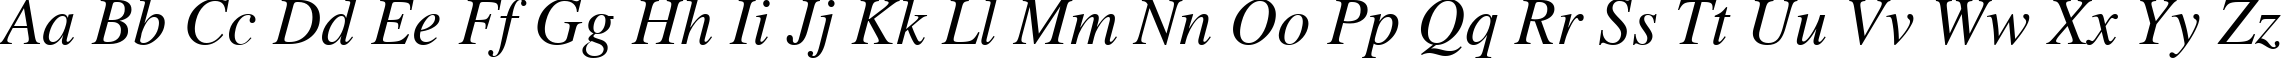 Пример написания английского алфавита шрифтом Times Italic